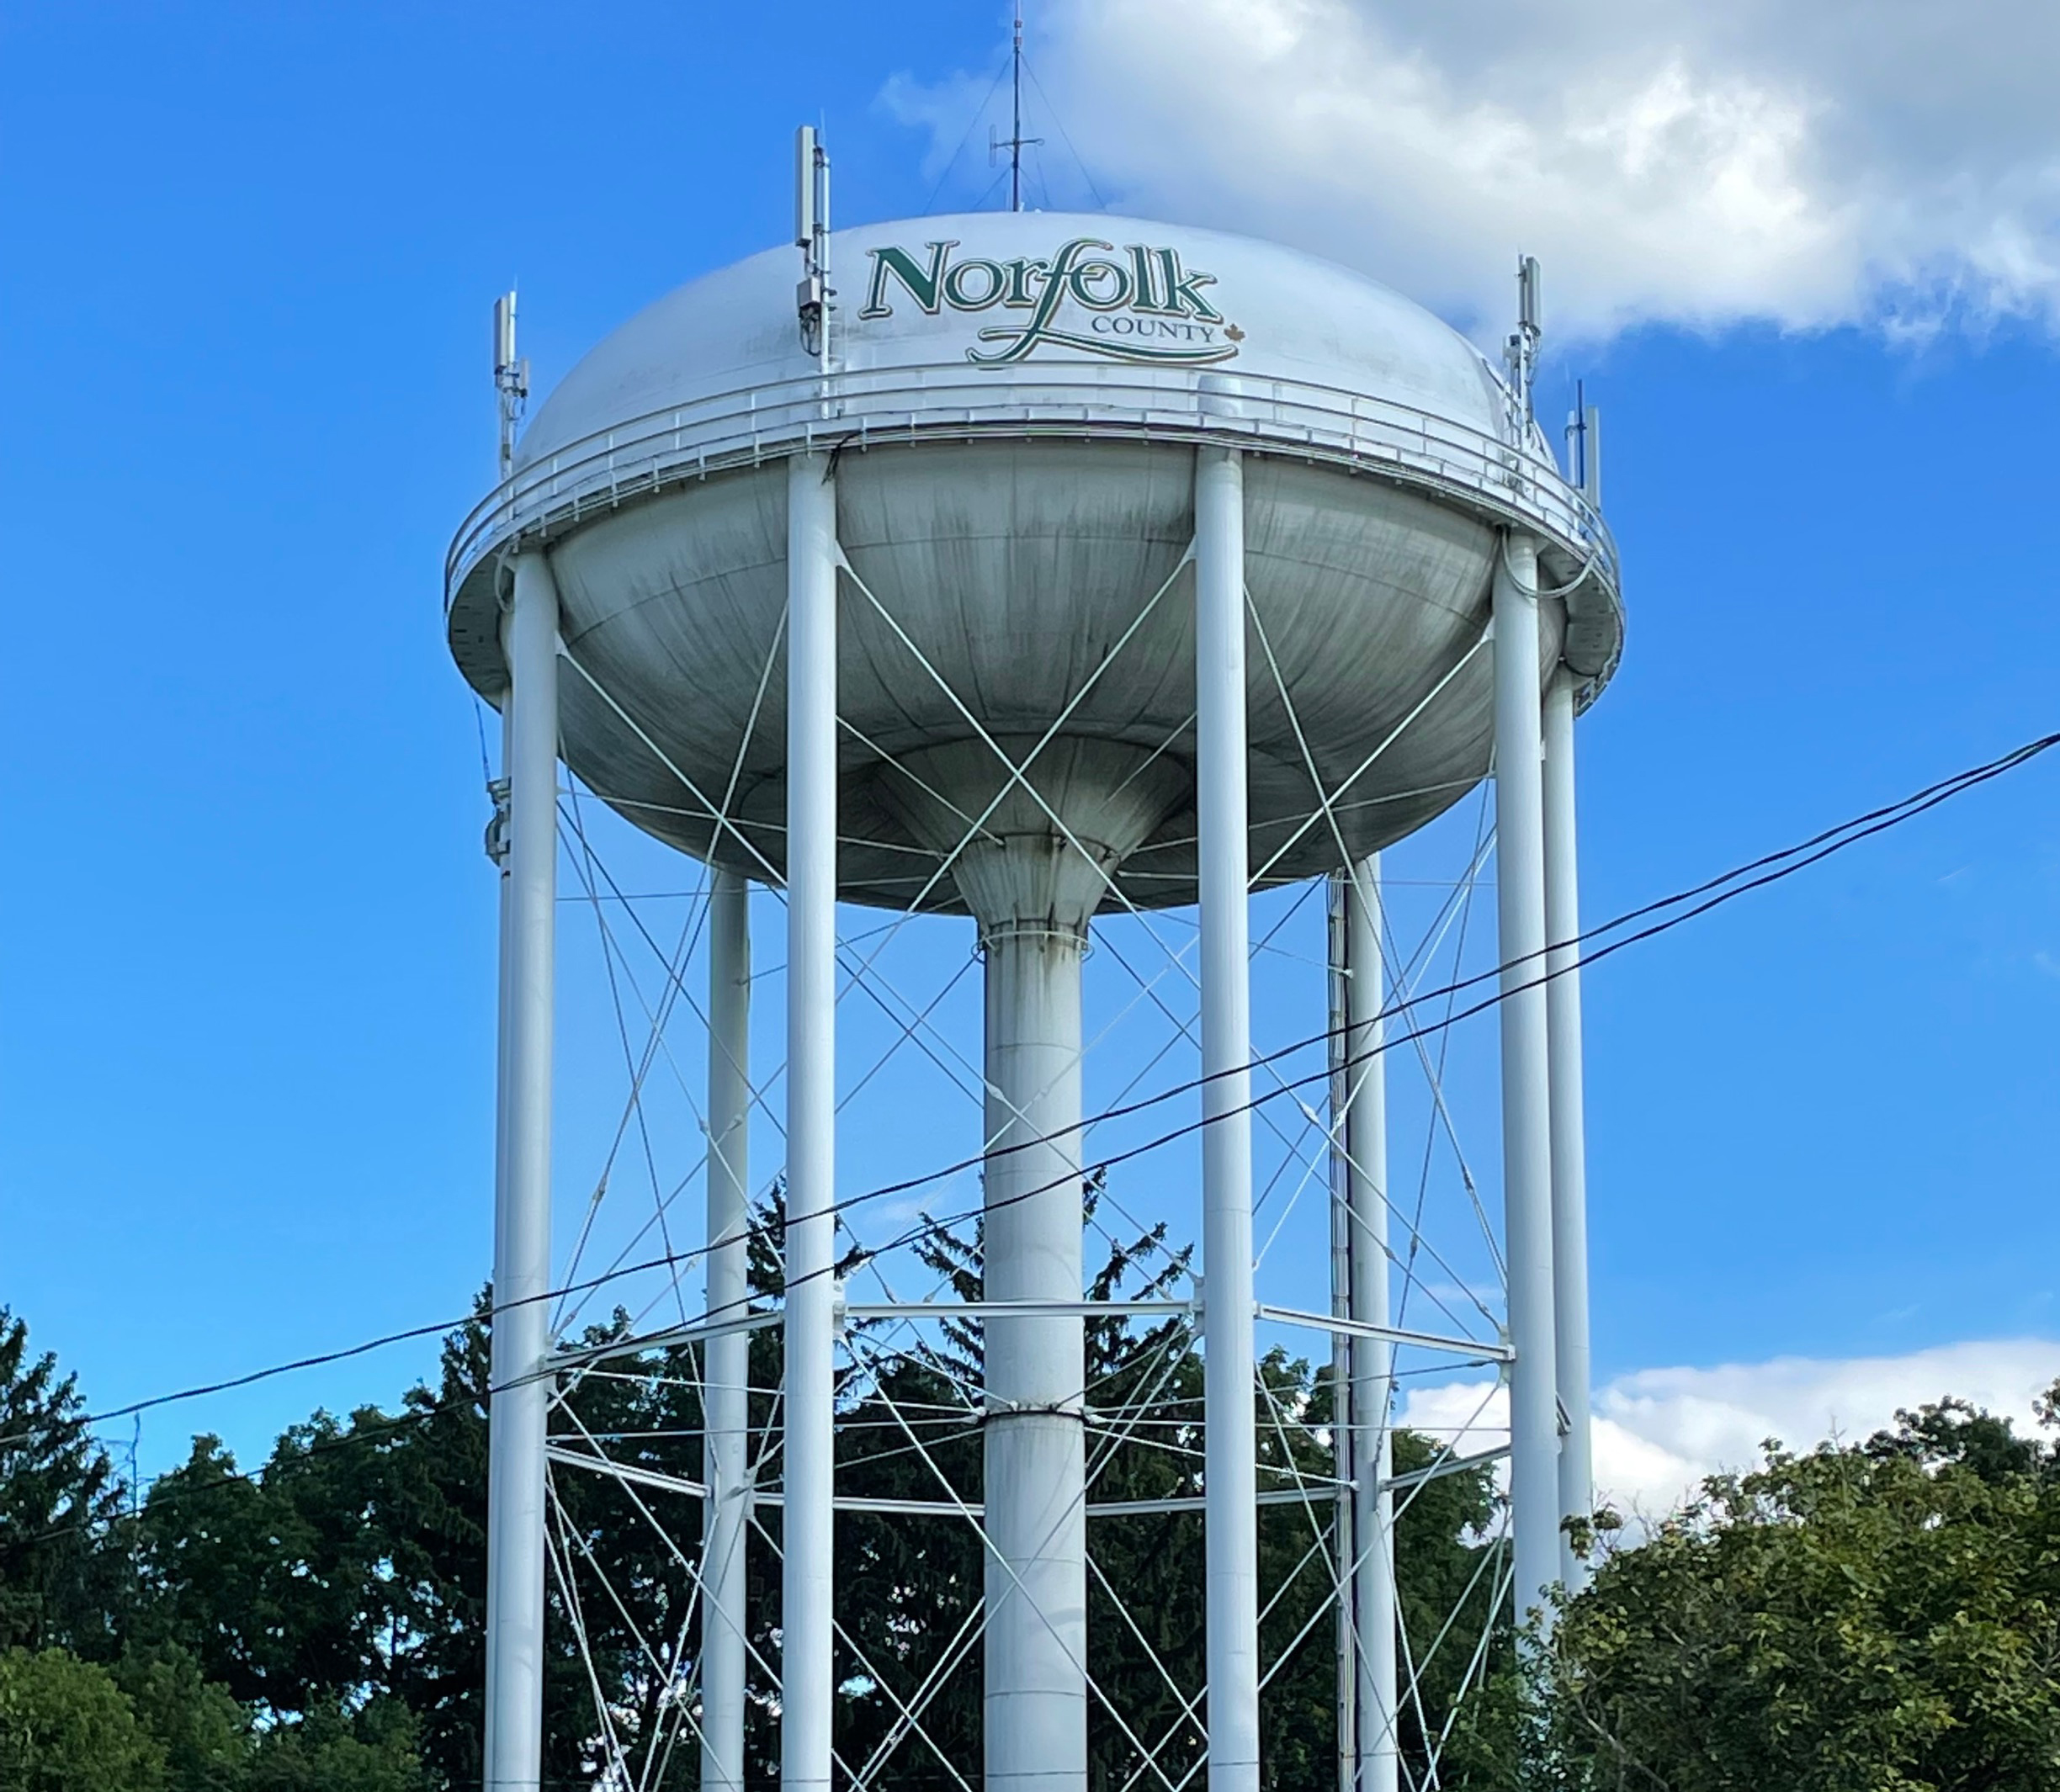 Simcoe water tower